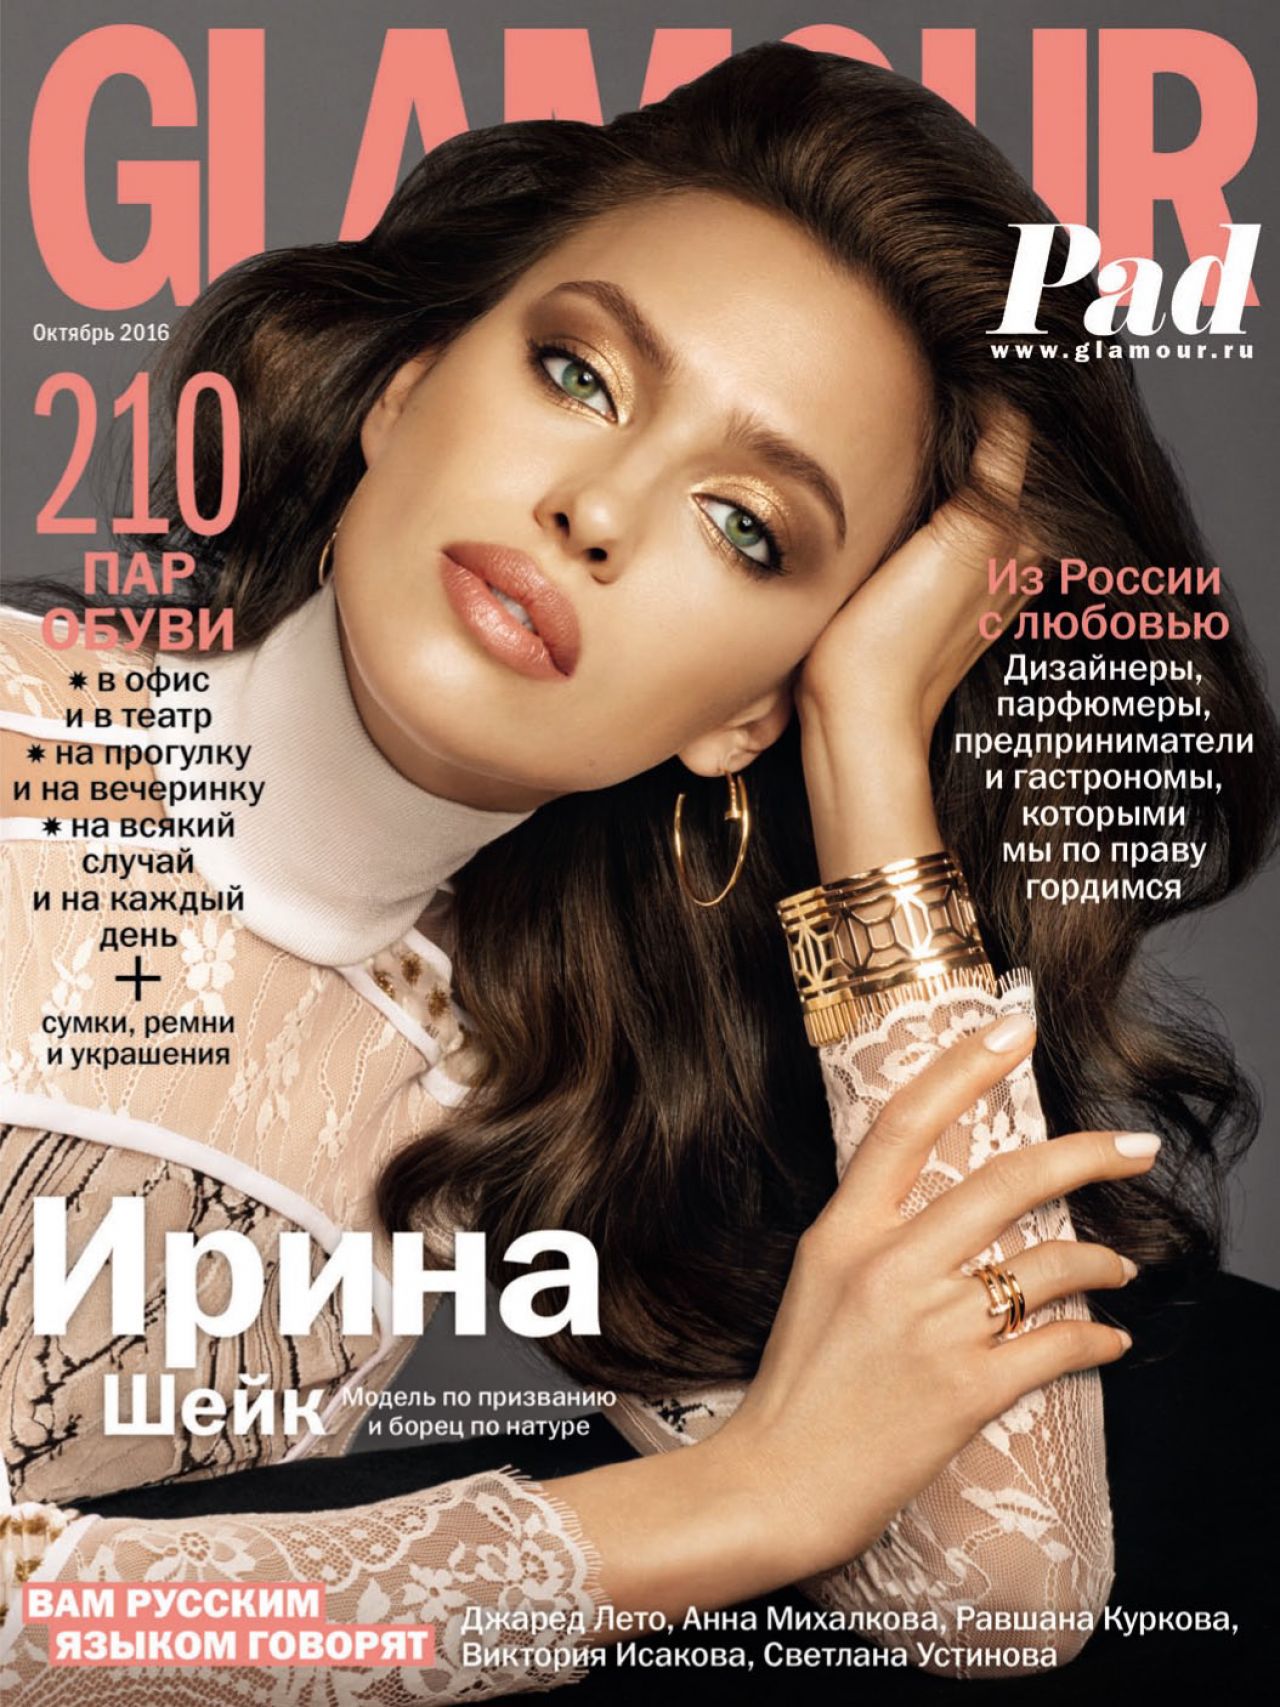 Irina Shayk - Glamour MAgazine Russia October 2016 Cover and Photos